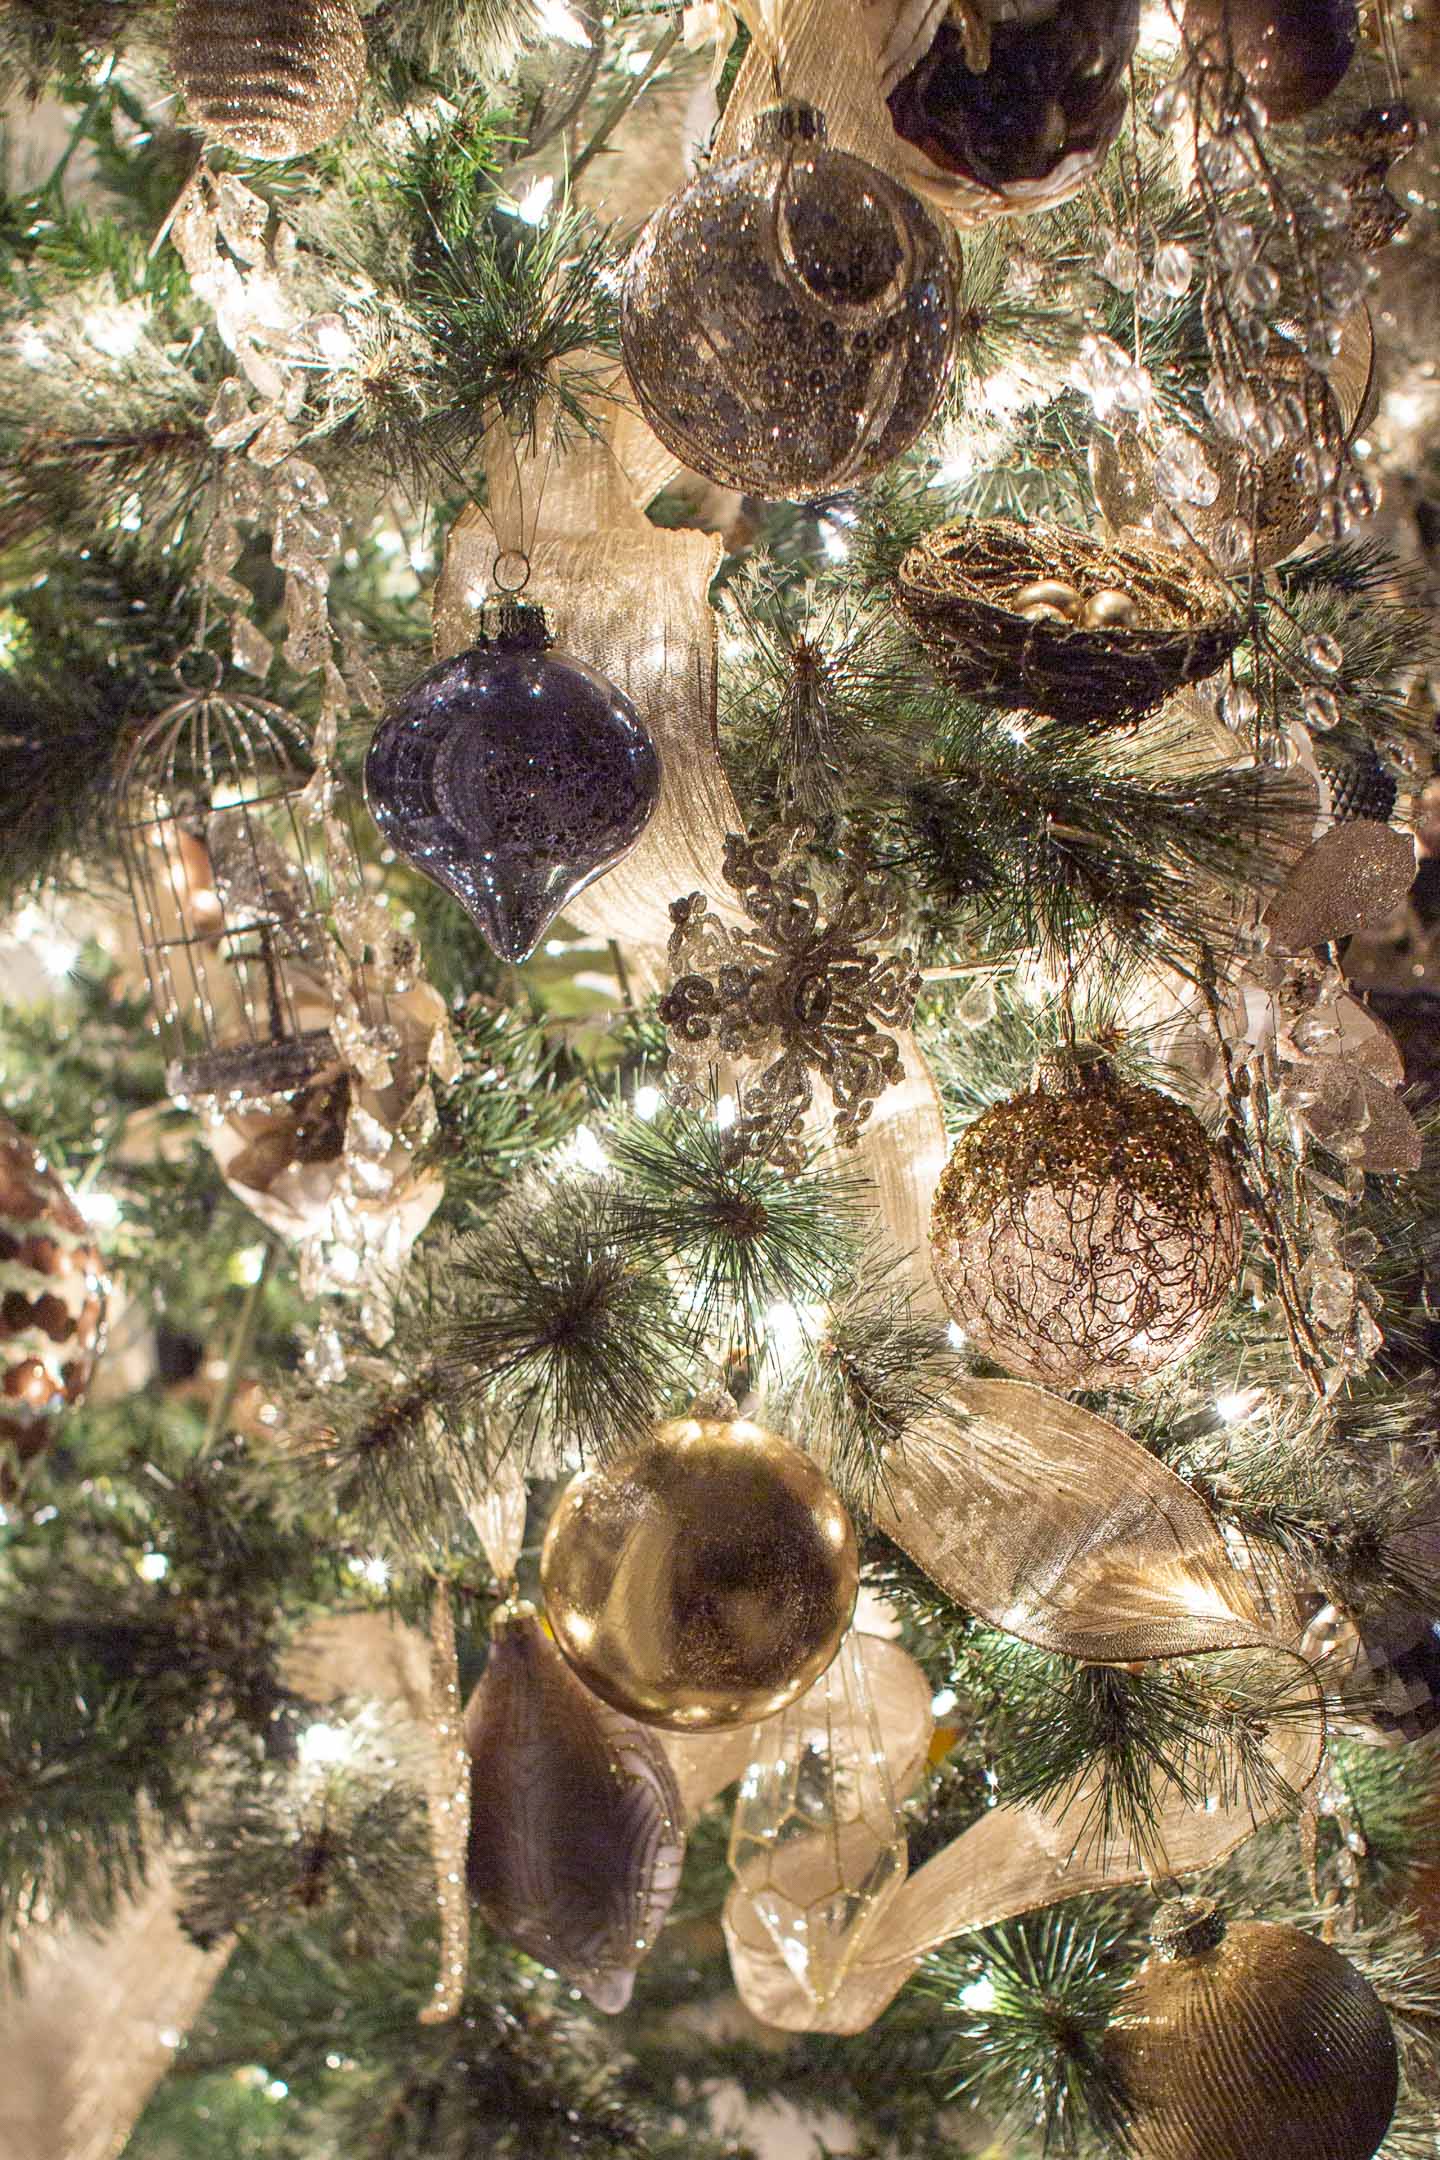 Mixed metals Christmas tree decorations at night